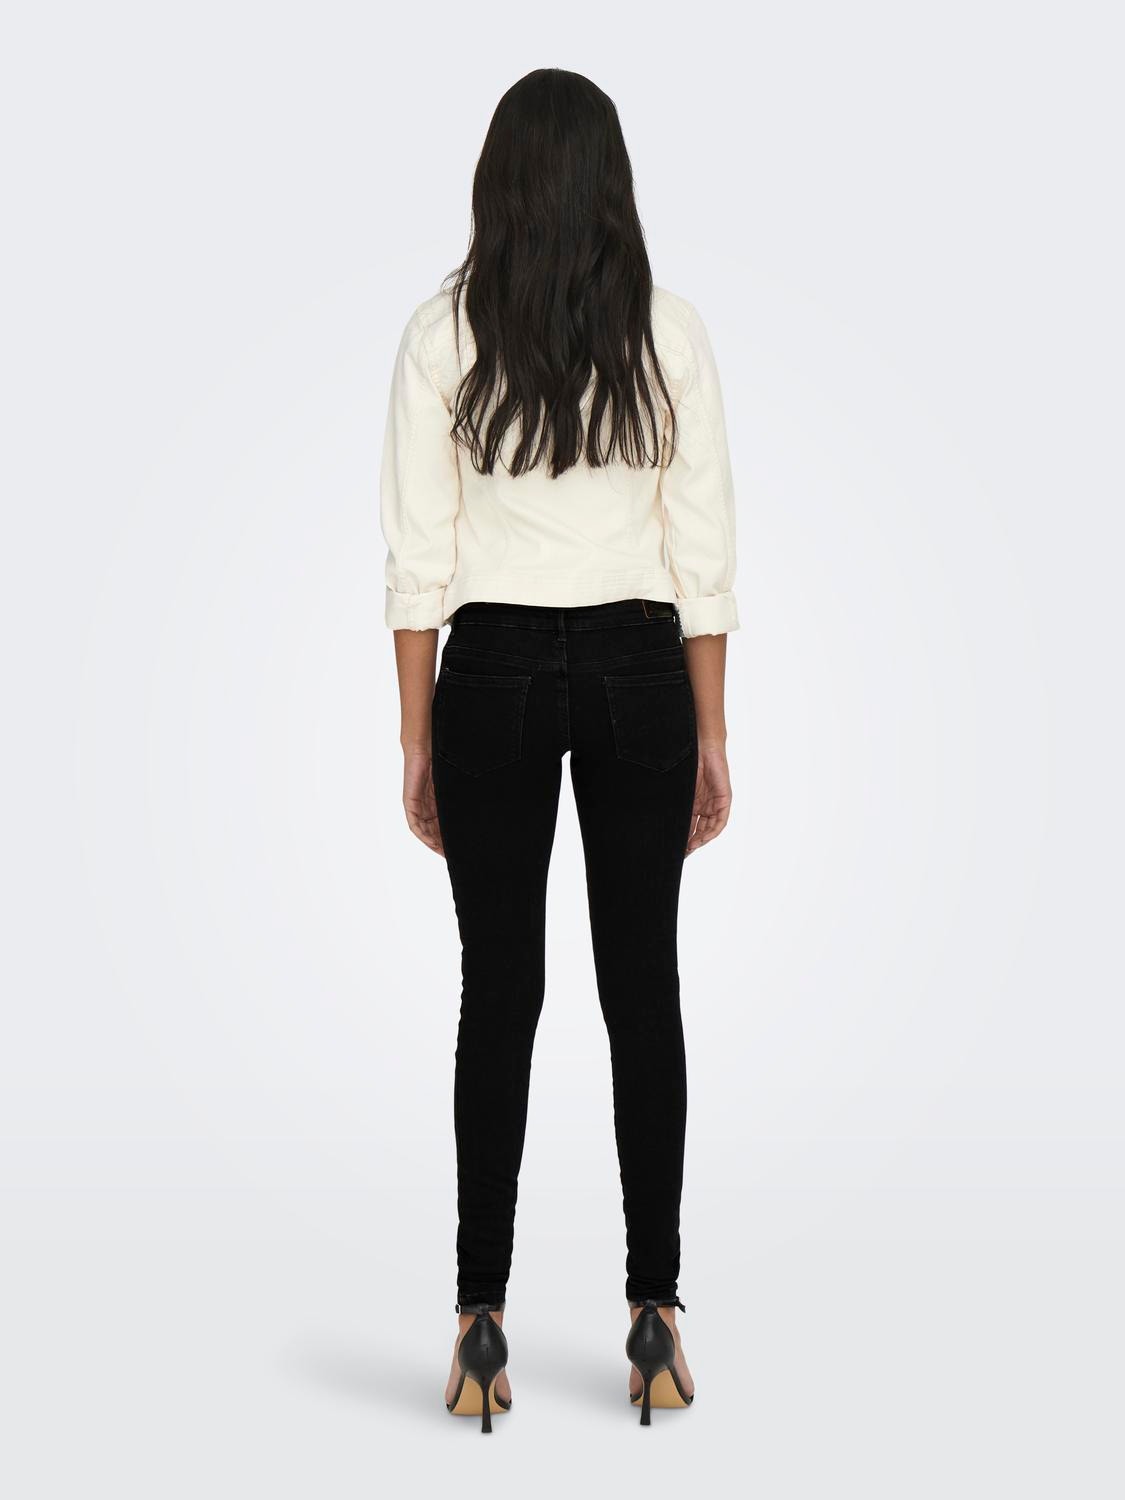 ONLY Skinny fit Super low waist Jeans -Black Denim - 15233217